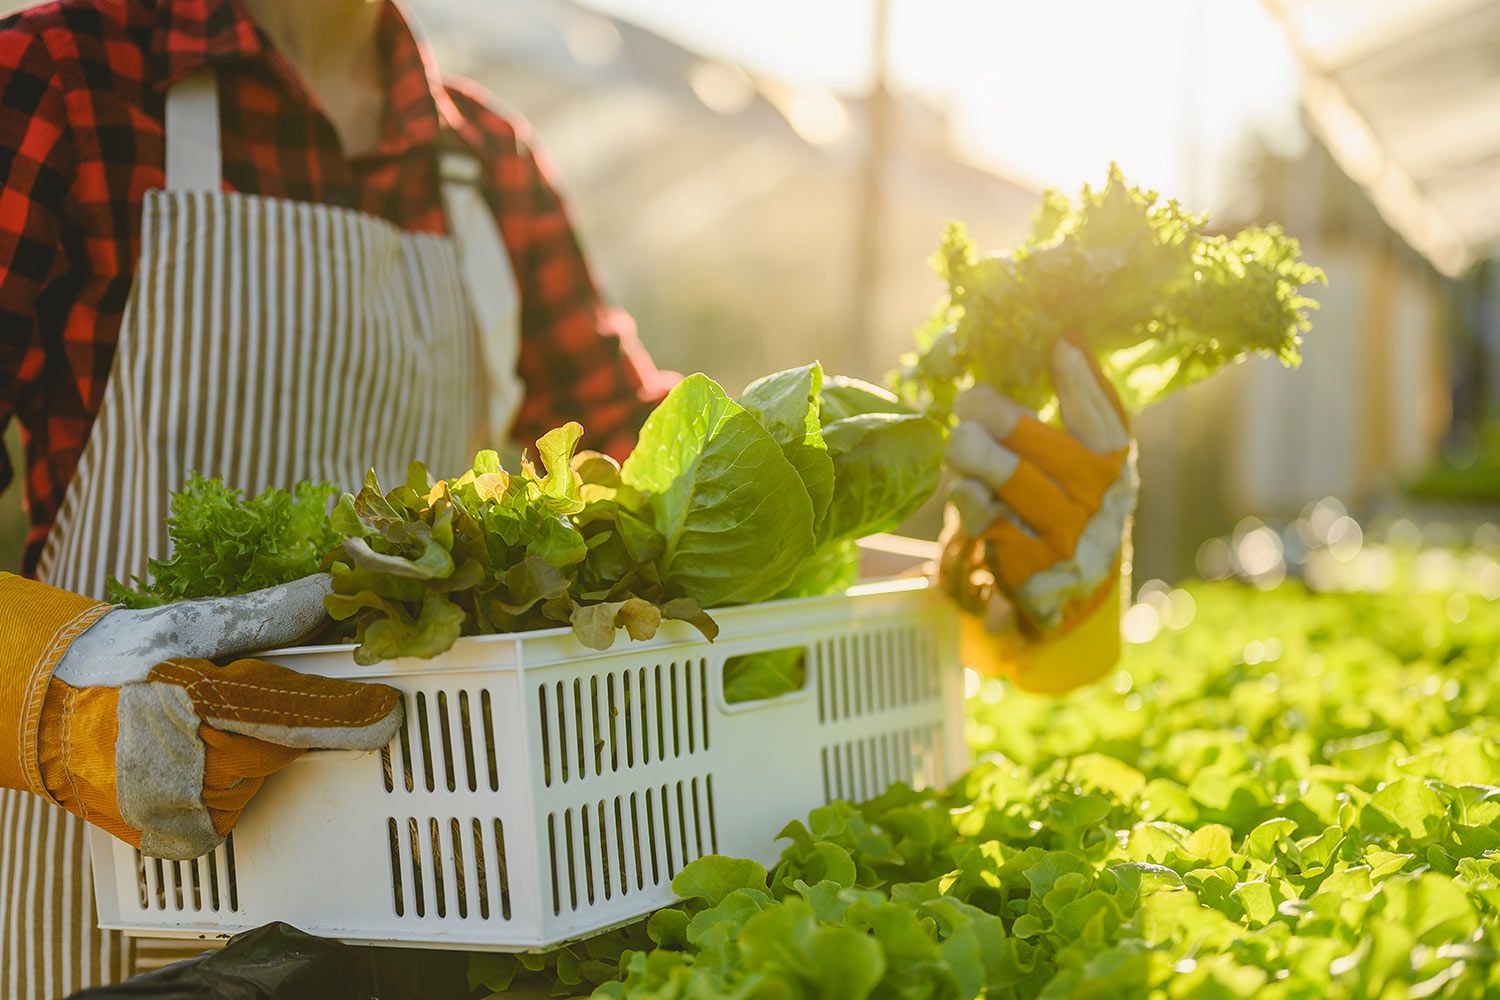 Farmworker holding lettuce